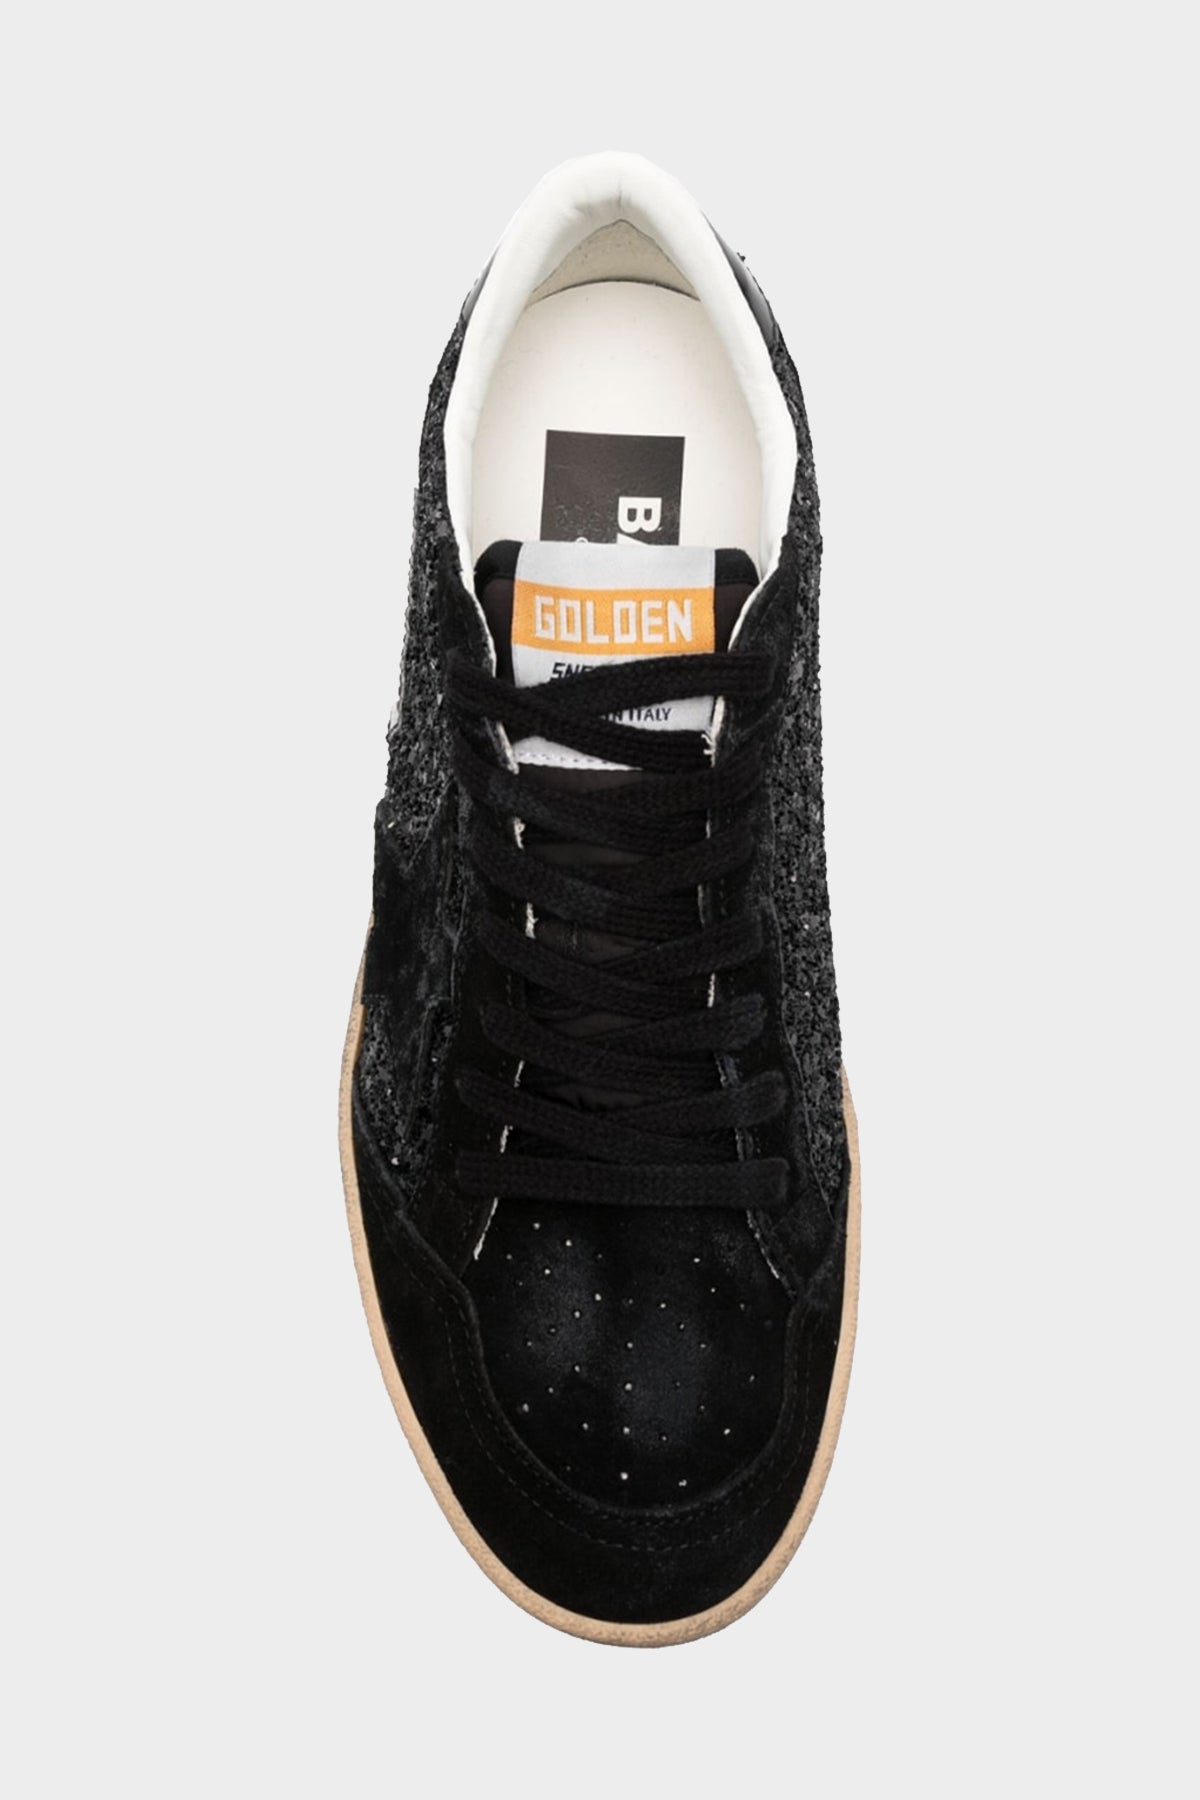 Ball-Star Black Glitter Leather Sneaker - shop-olivia.com